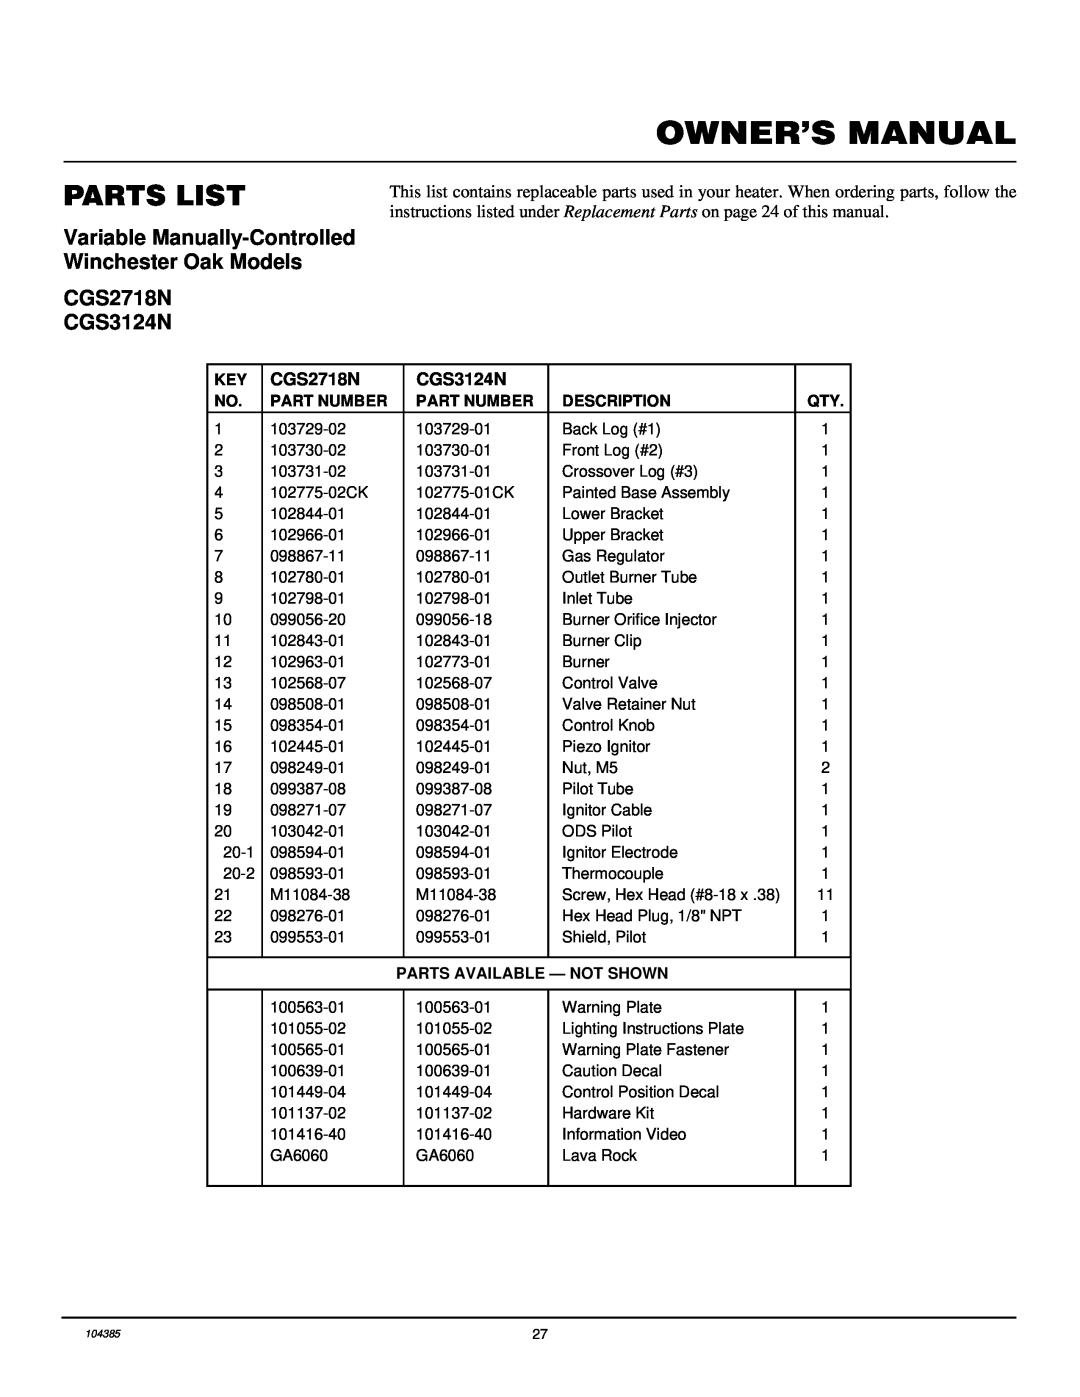 Desa CLD3018N Parts List, Variable Manually-ControlledWinchester Oak Models, CGS2718N CGS3124N, Part Number, Description 